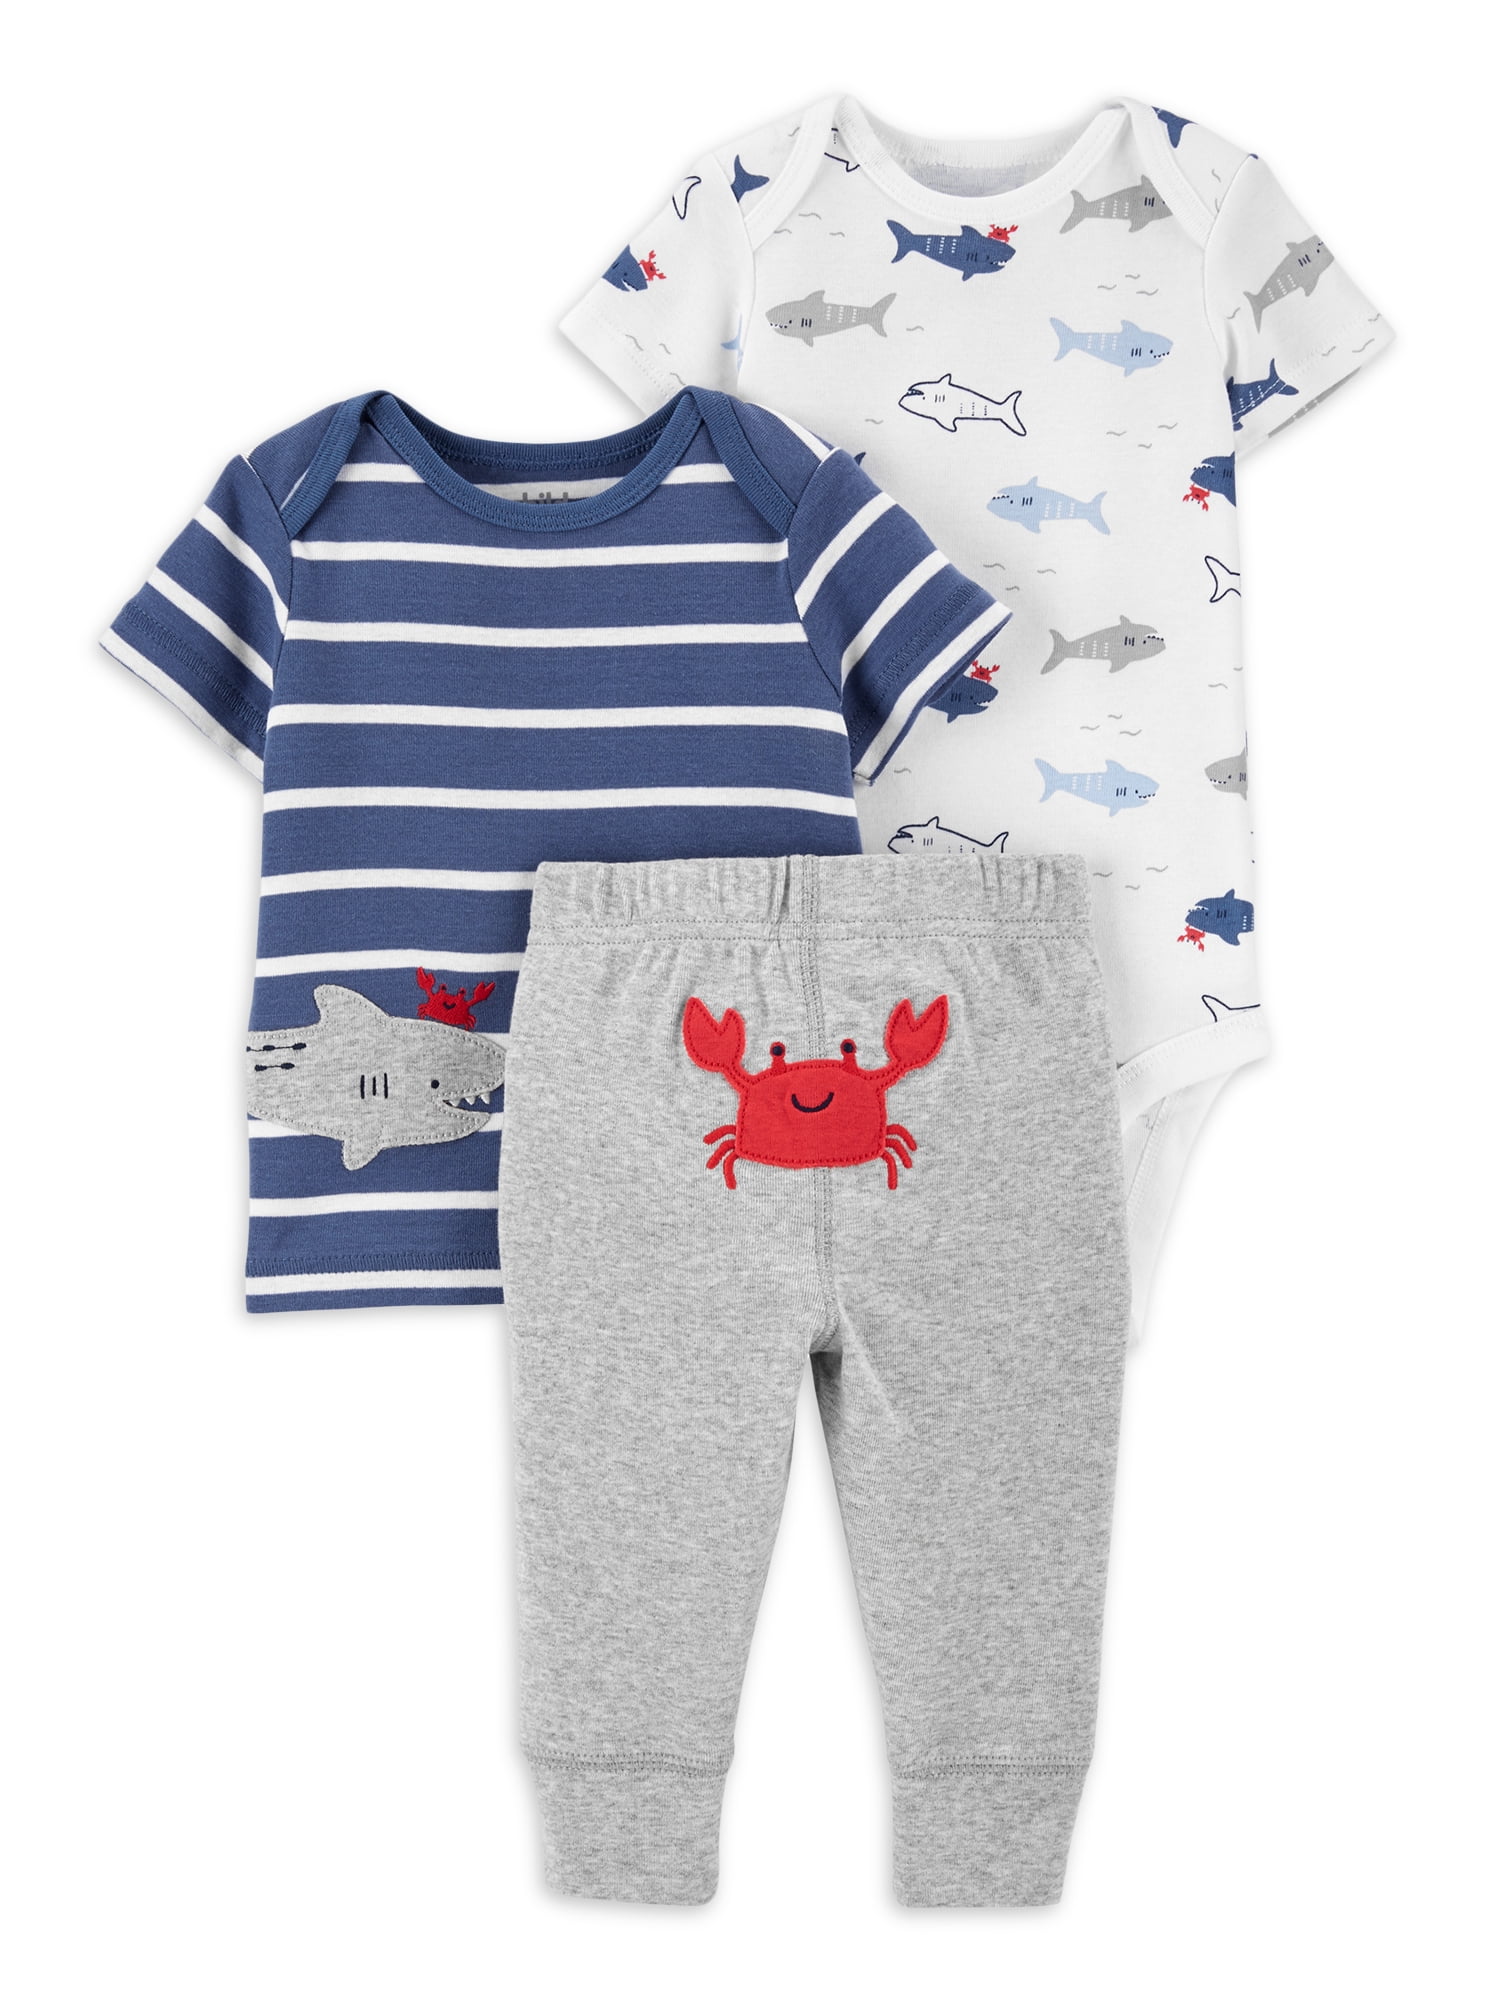 Hat+Bid Set Outfits Clothes 0-3M 5Pcs Newborn Infant Baby Girl Boy Shirt+Pants